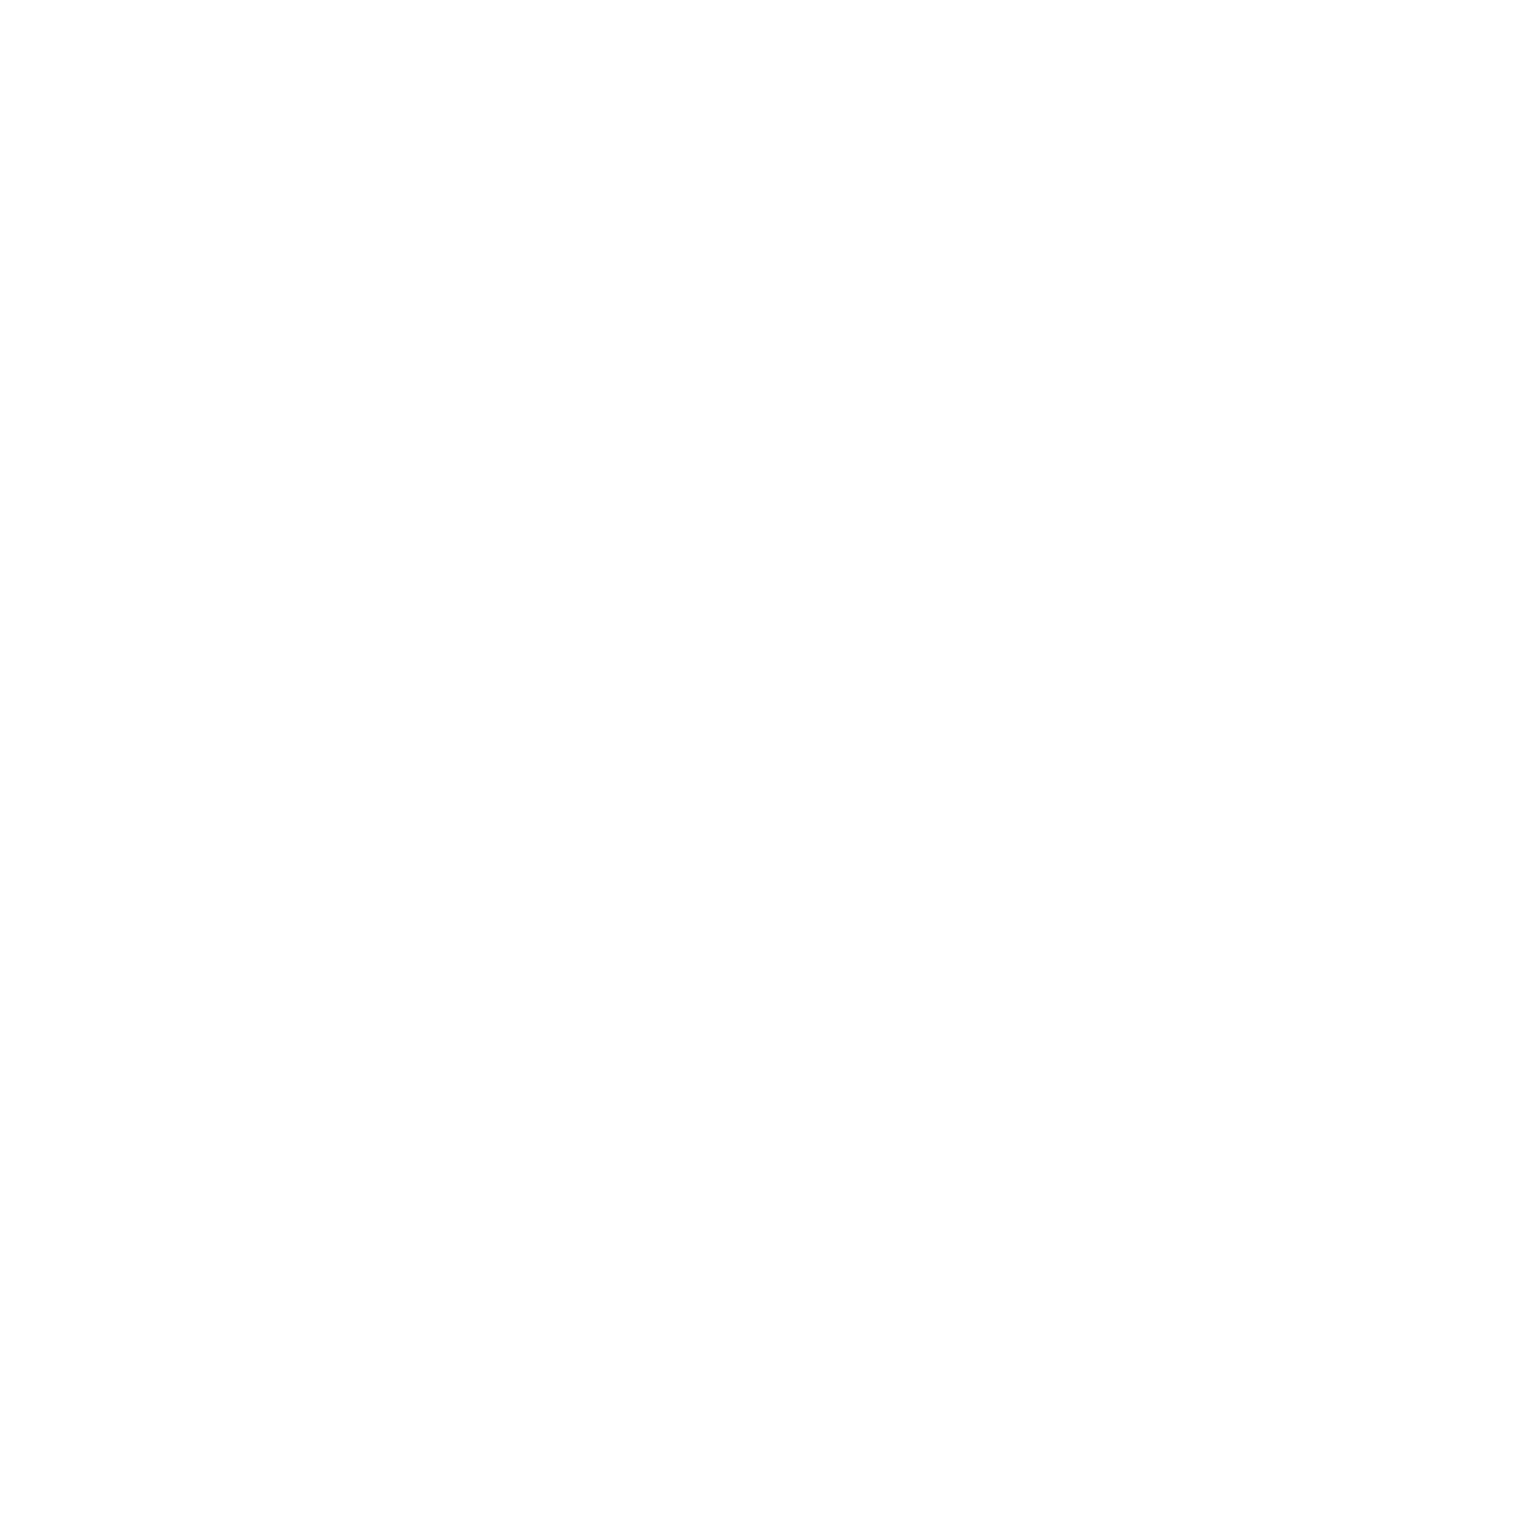 Yext logo for dark backgrounds (transparent PNG)